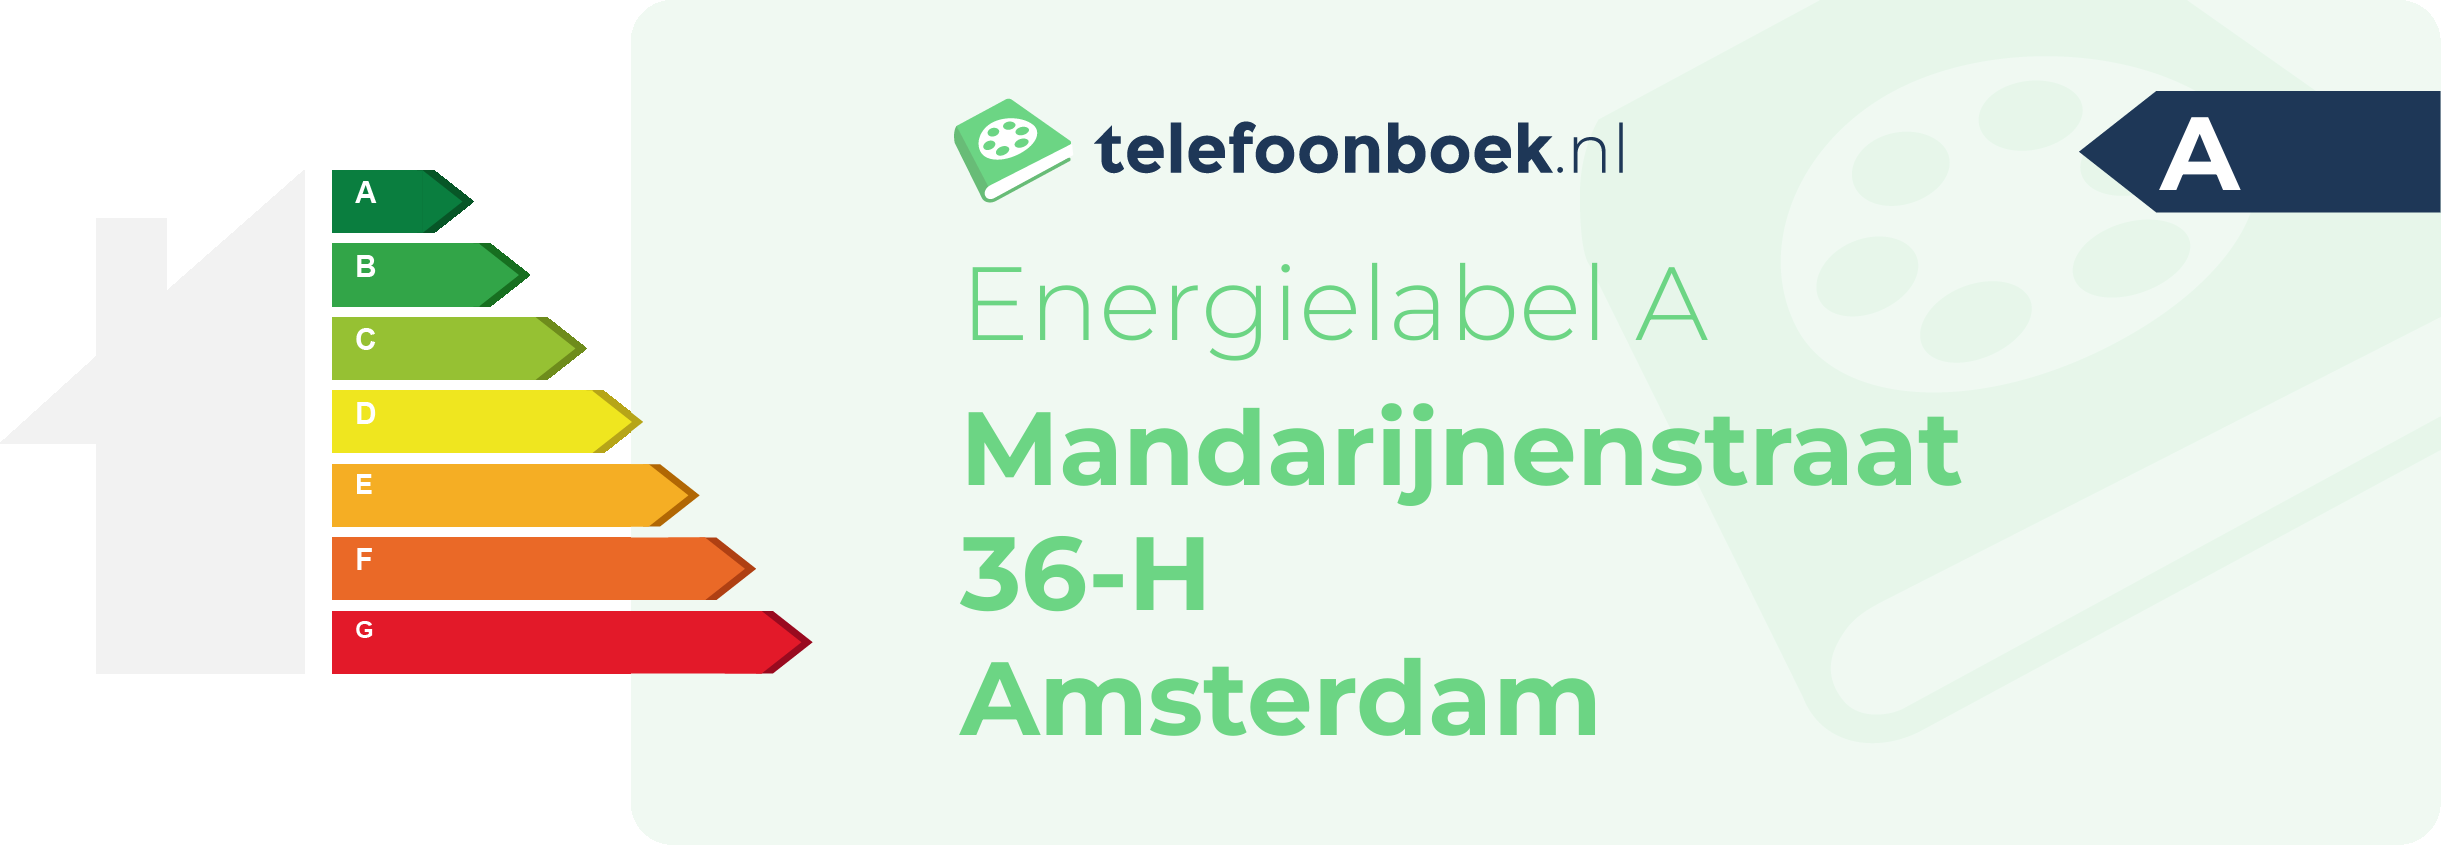 Energielabel Mandarijnenstraat 36-H Amsterdam